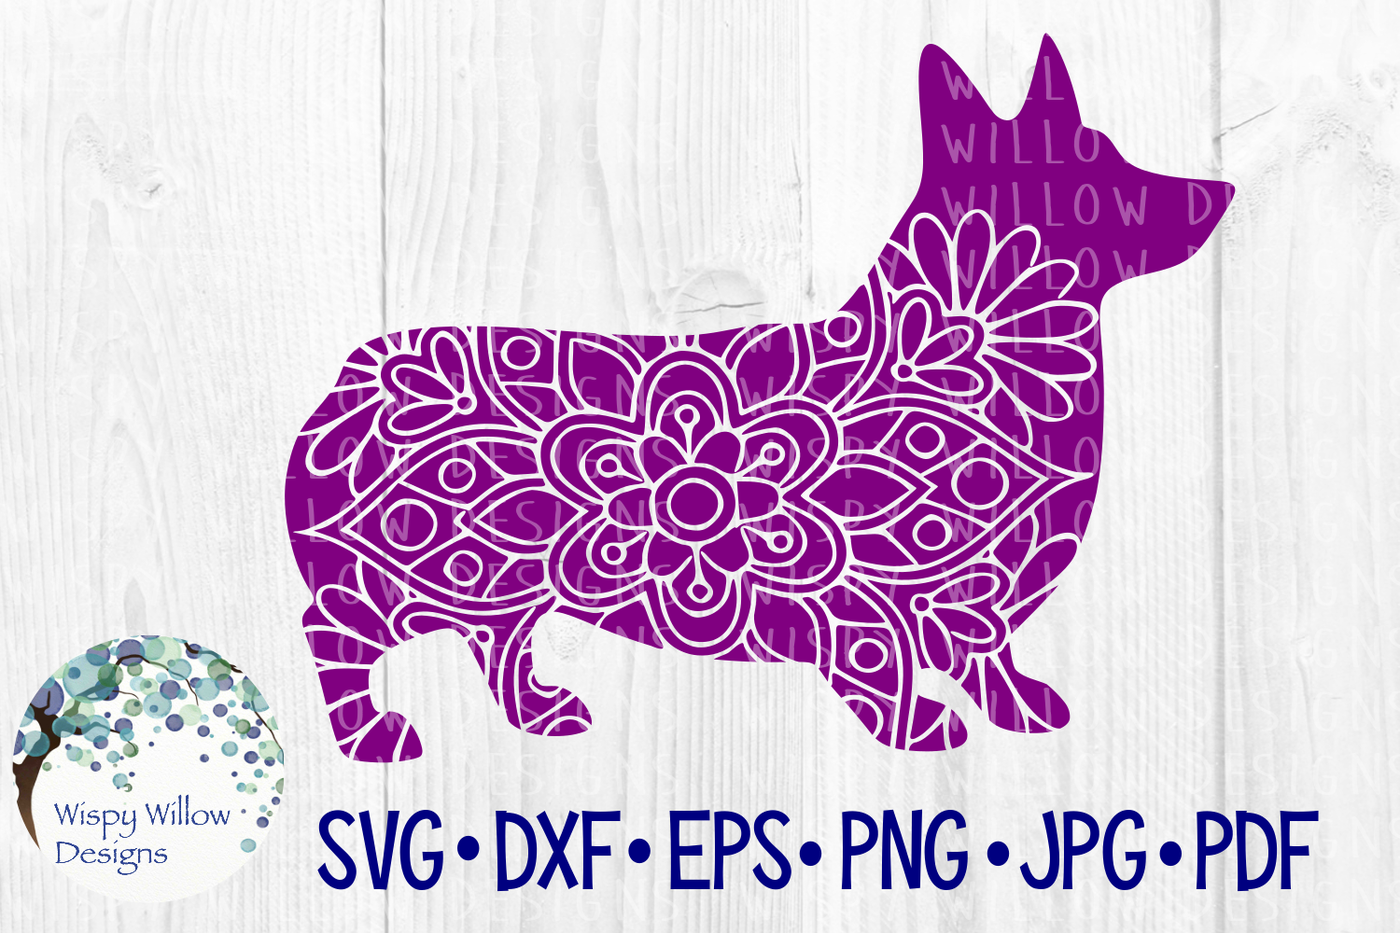 Corgi, Dog Mandala, SVG/DXF/EPS/PNG/JPG/PDF By Wispy Willow Designs